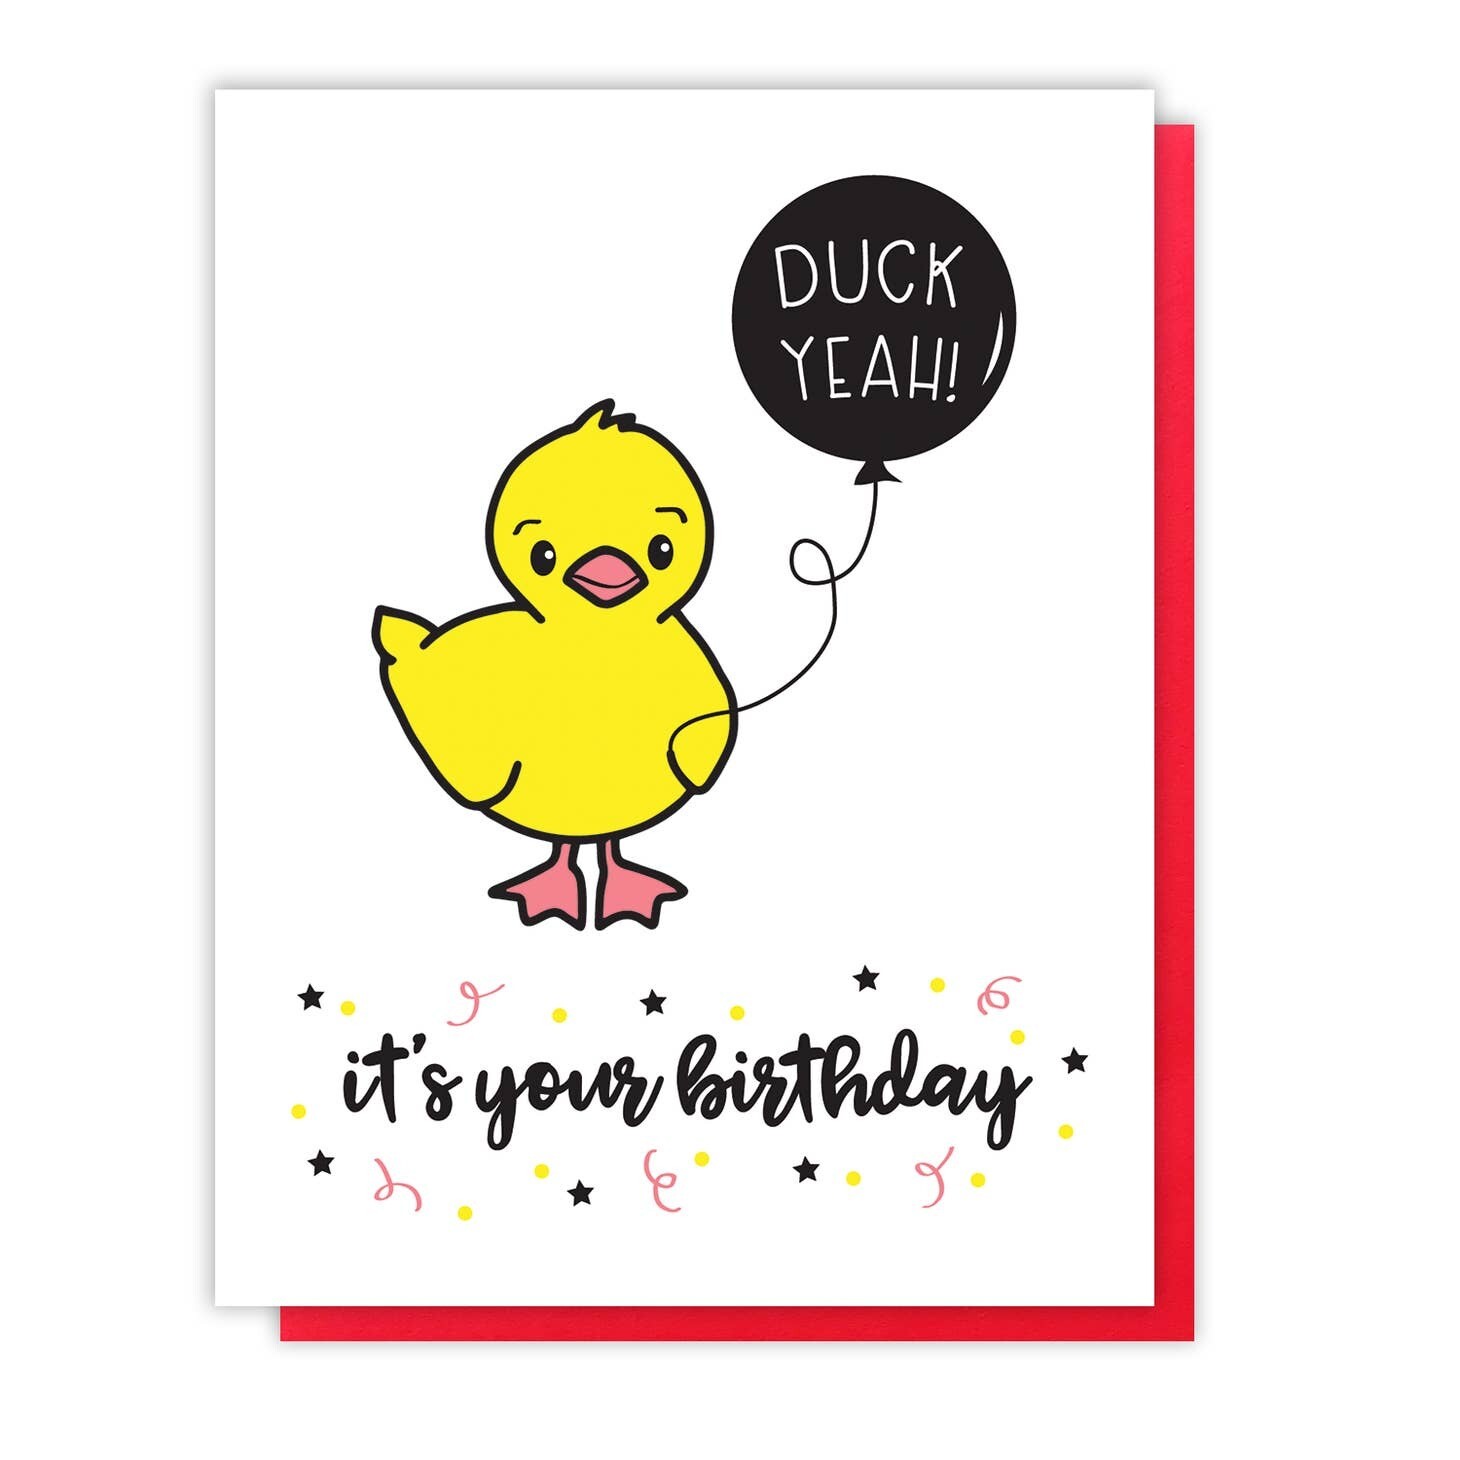 Duck Yeah Card